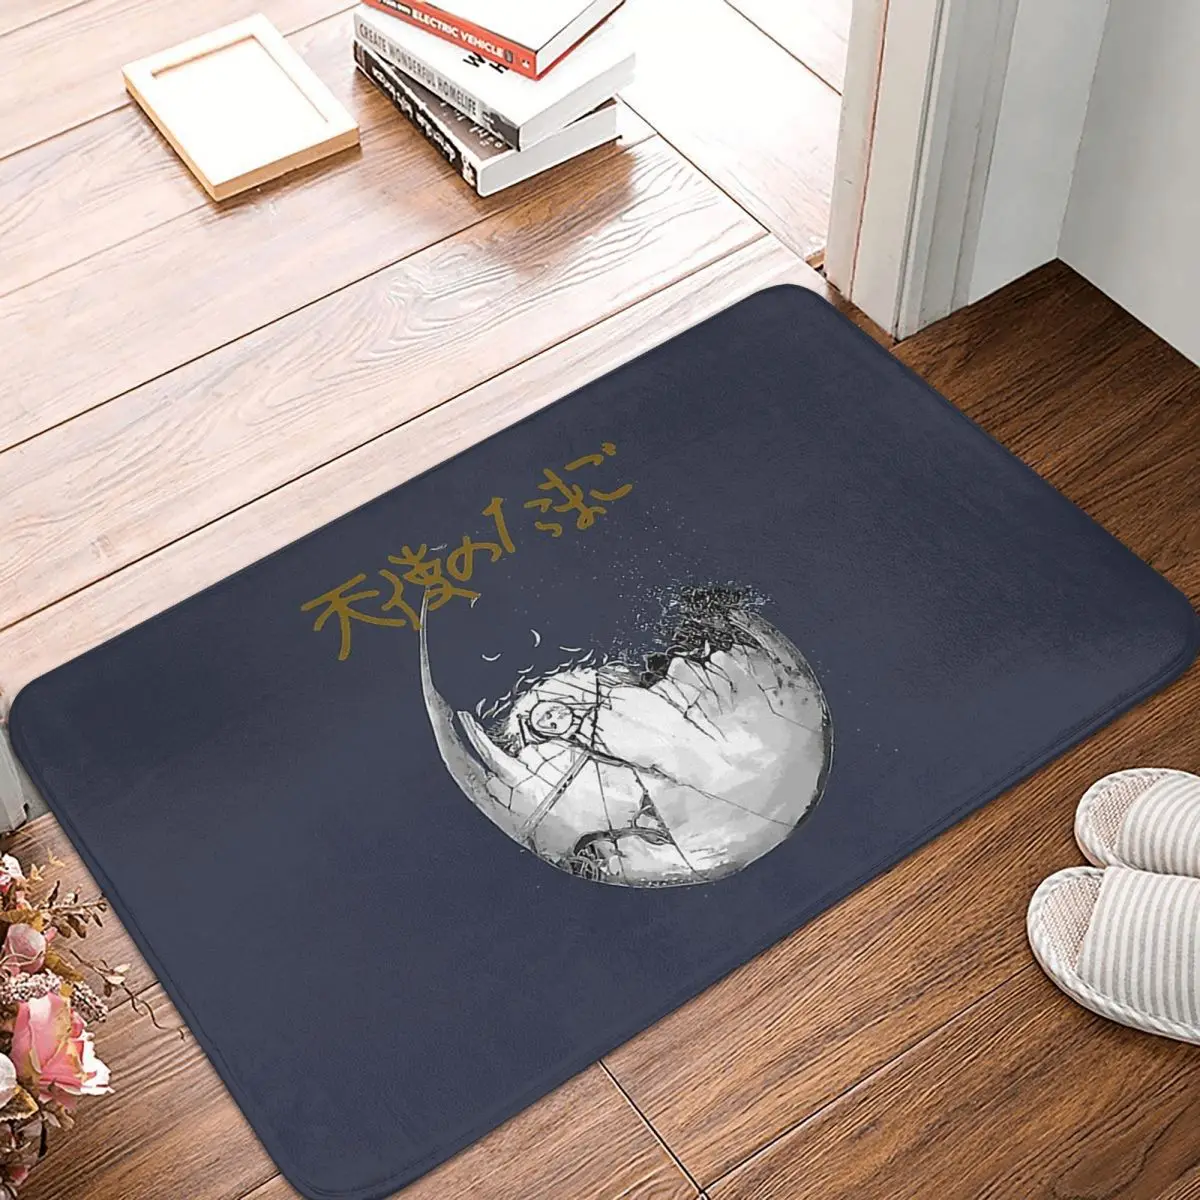 

Angel's Egg Cartoon Bath Mat Animation Poster Doormat Flannel Carpet Entrance Door Rug Home Decor